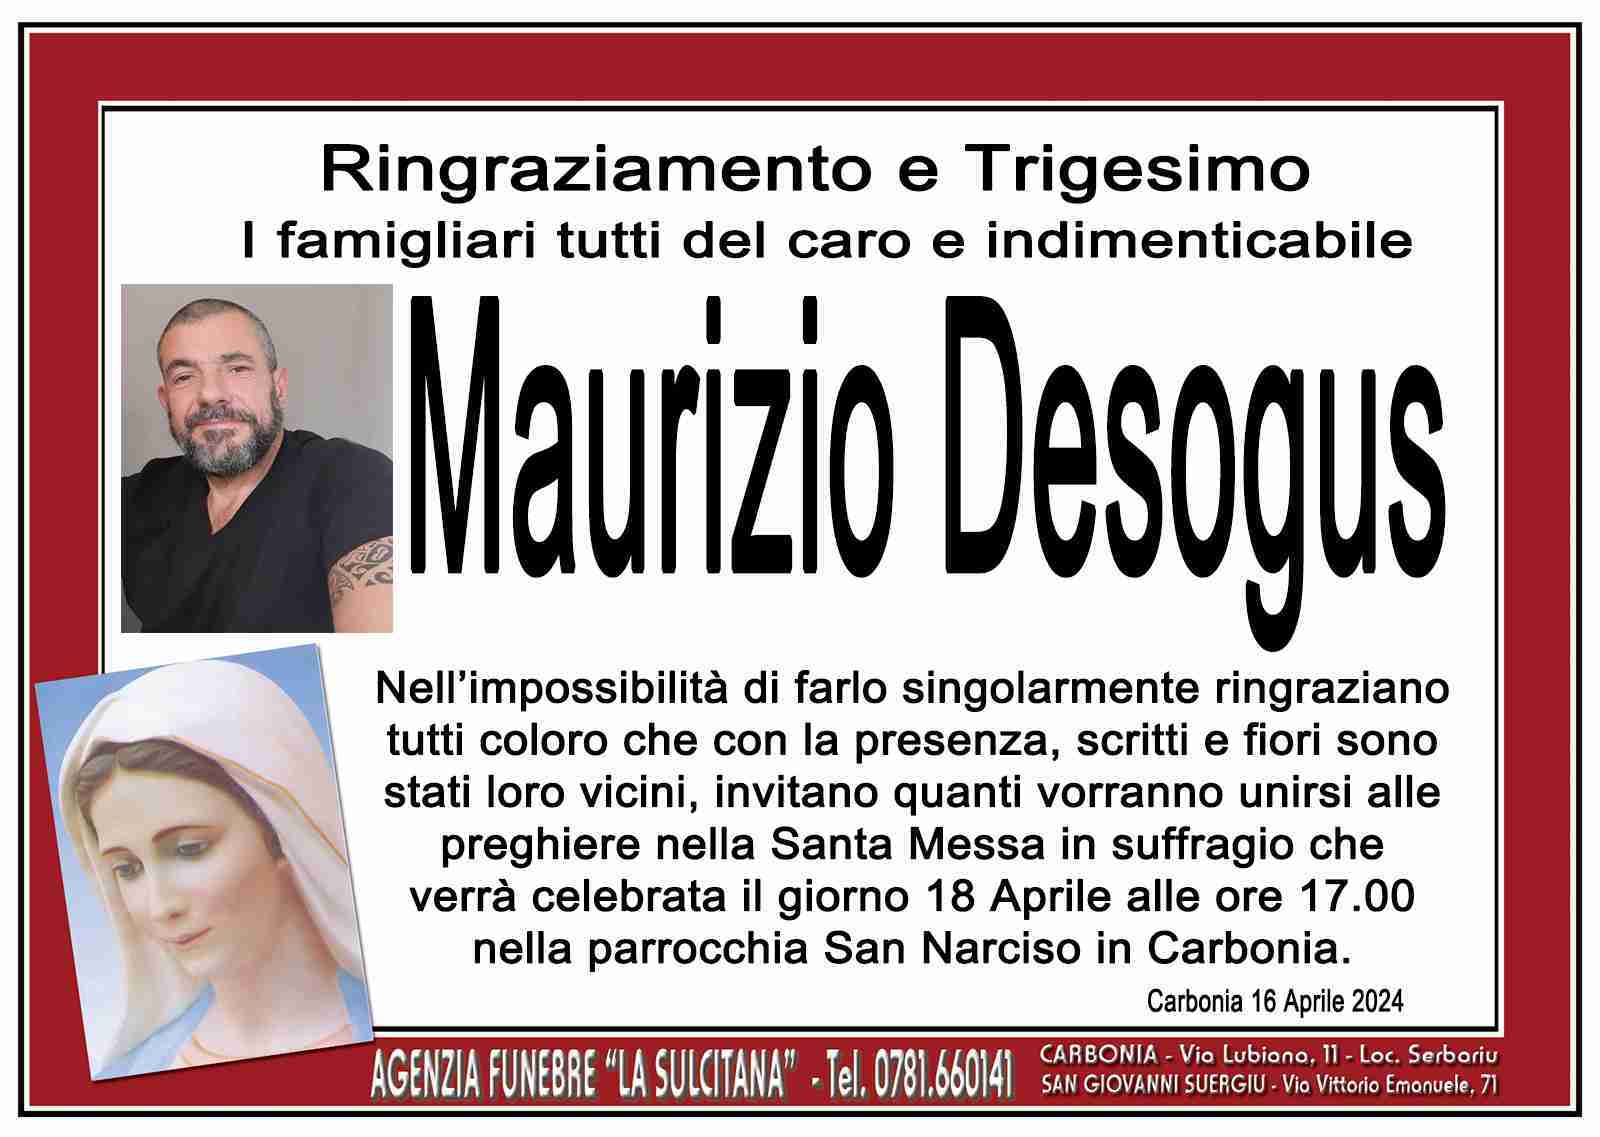 Maurizio Desogus